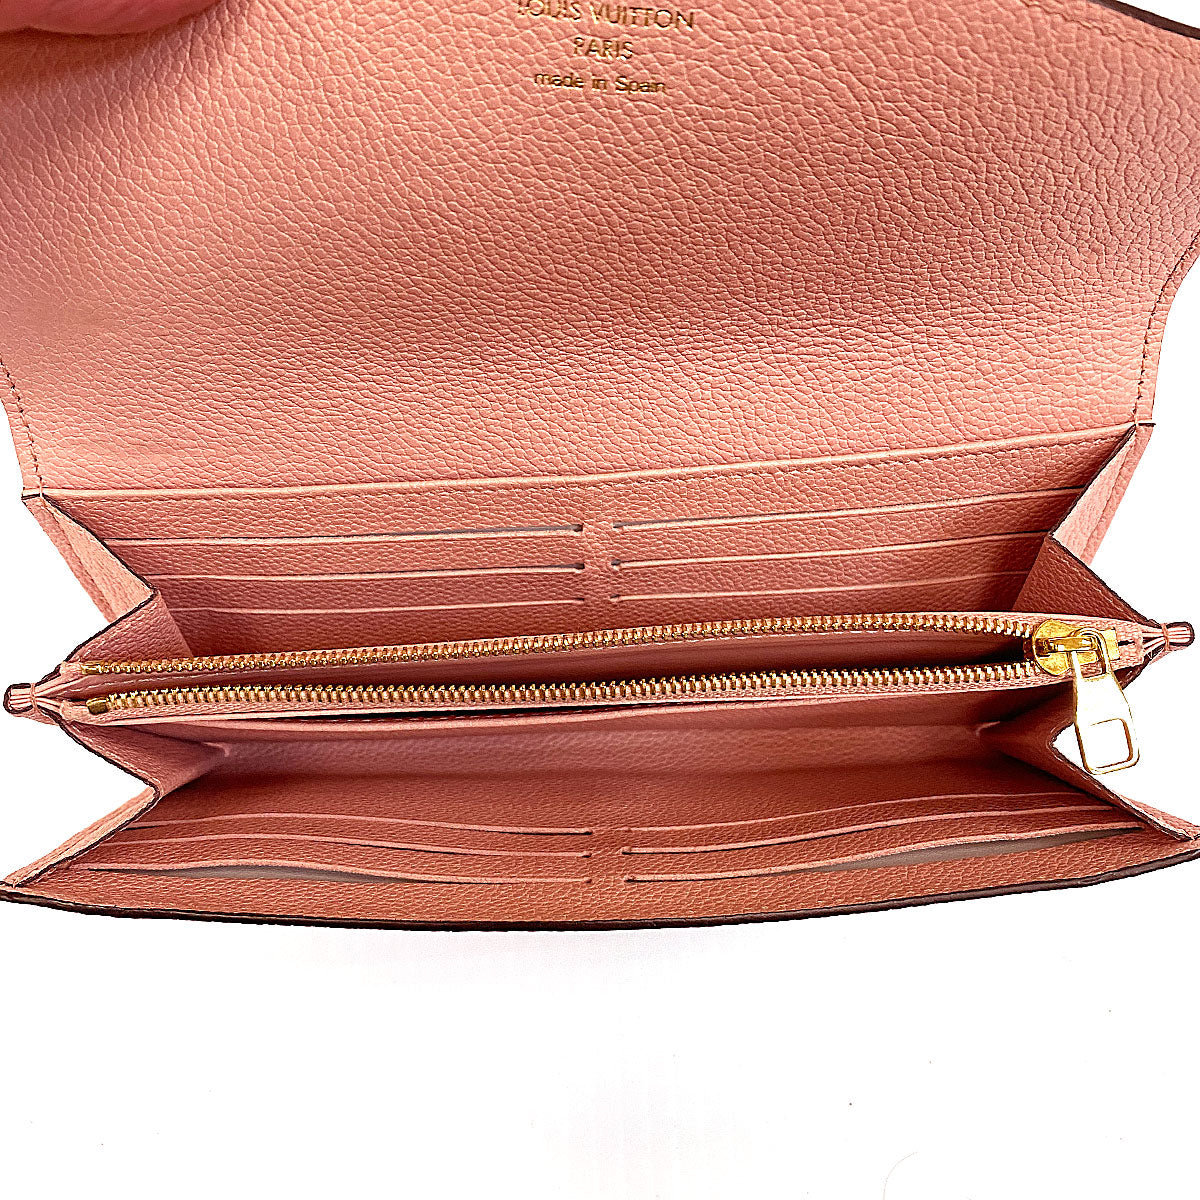 Discover Louis Vuitton Sarah Wallet: This envelope-style Sarah